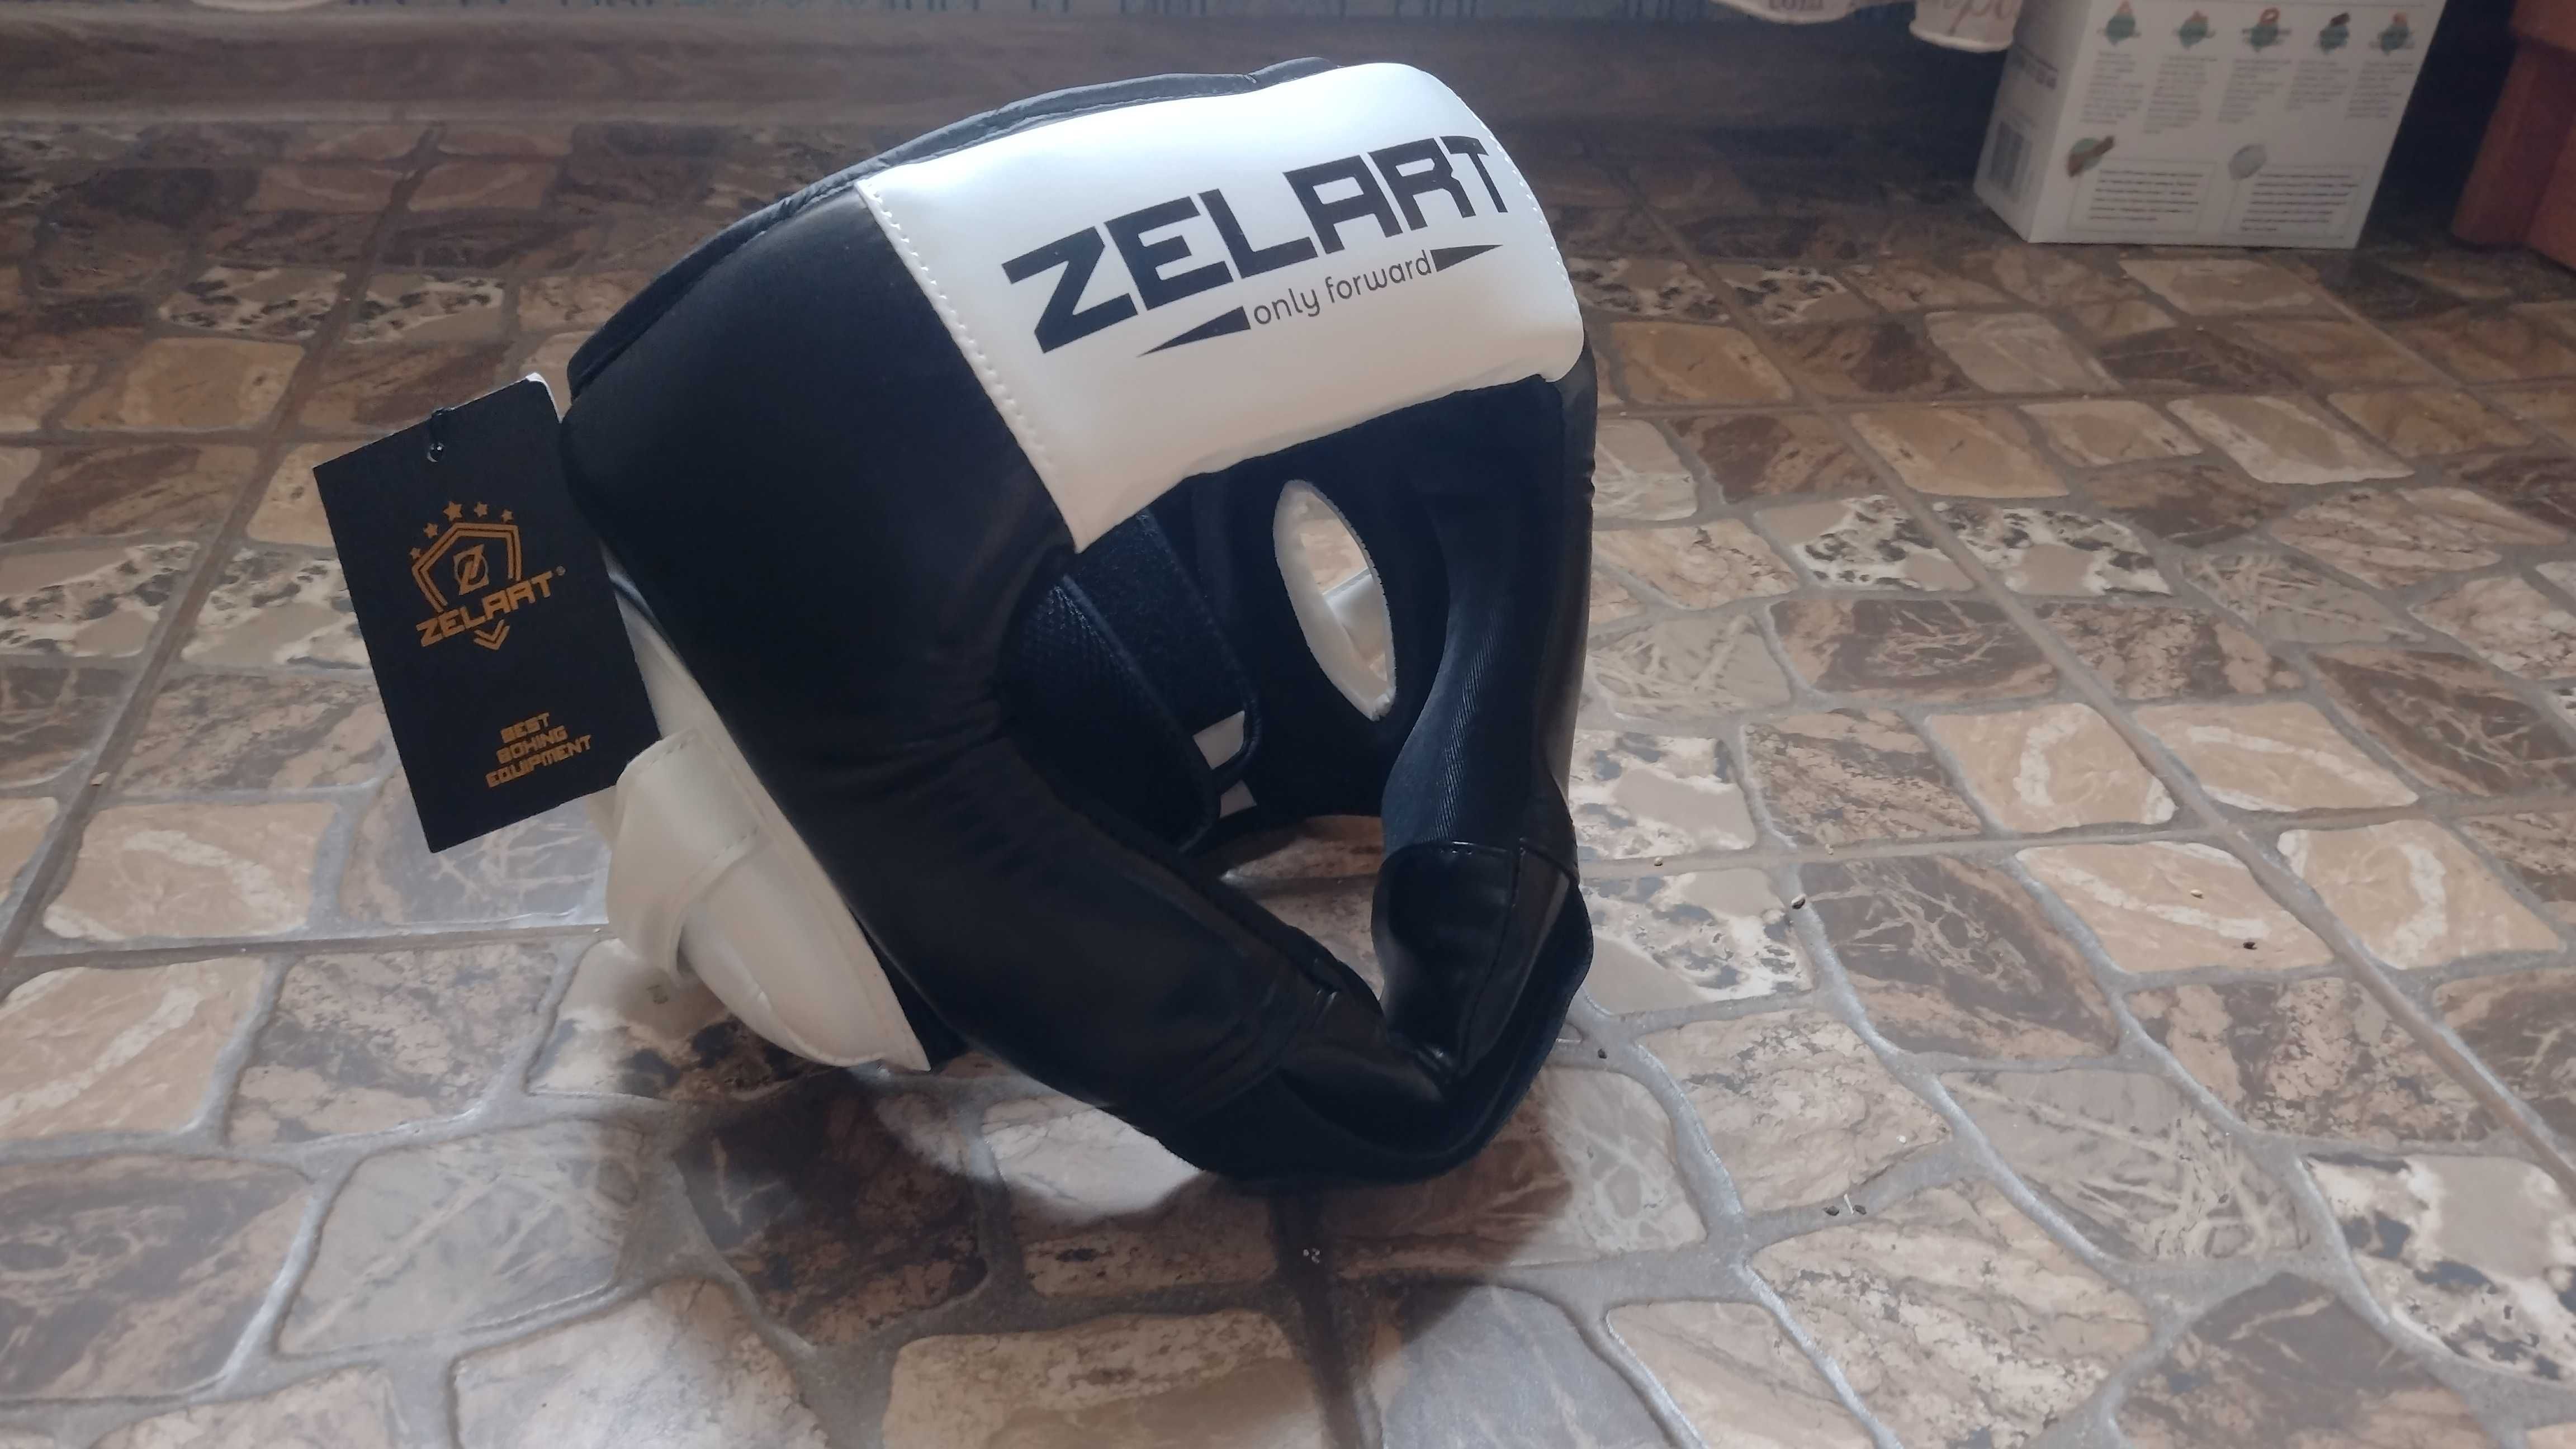 Шлем боксерский открытый ZELART BO-1386